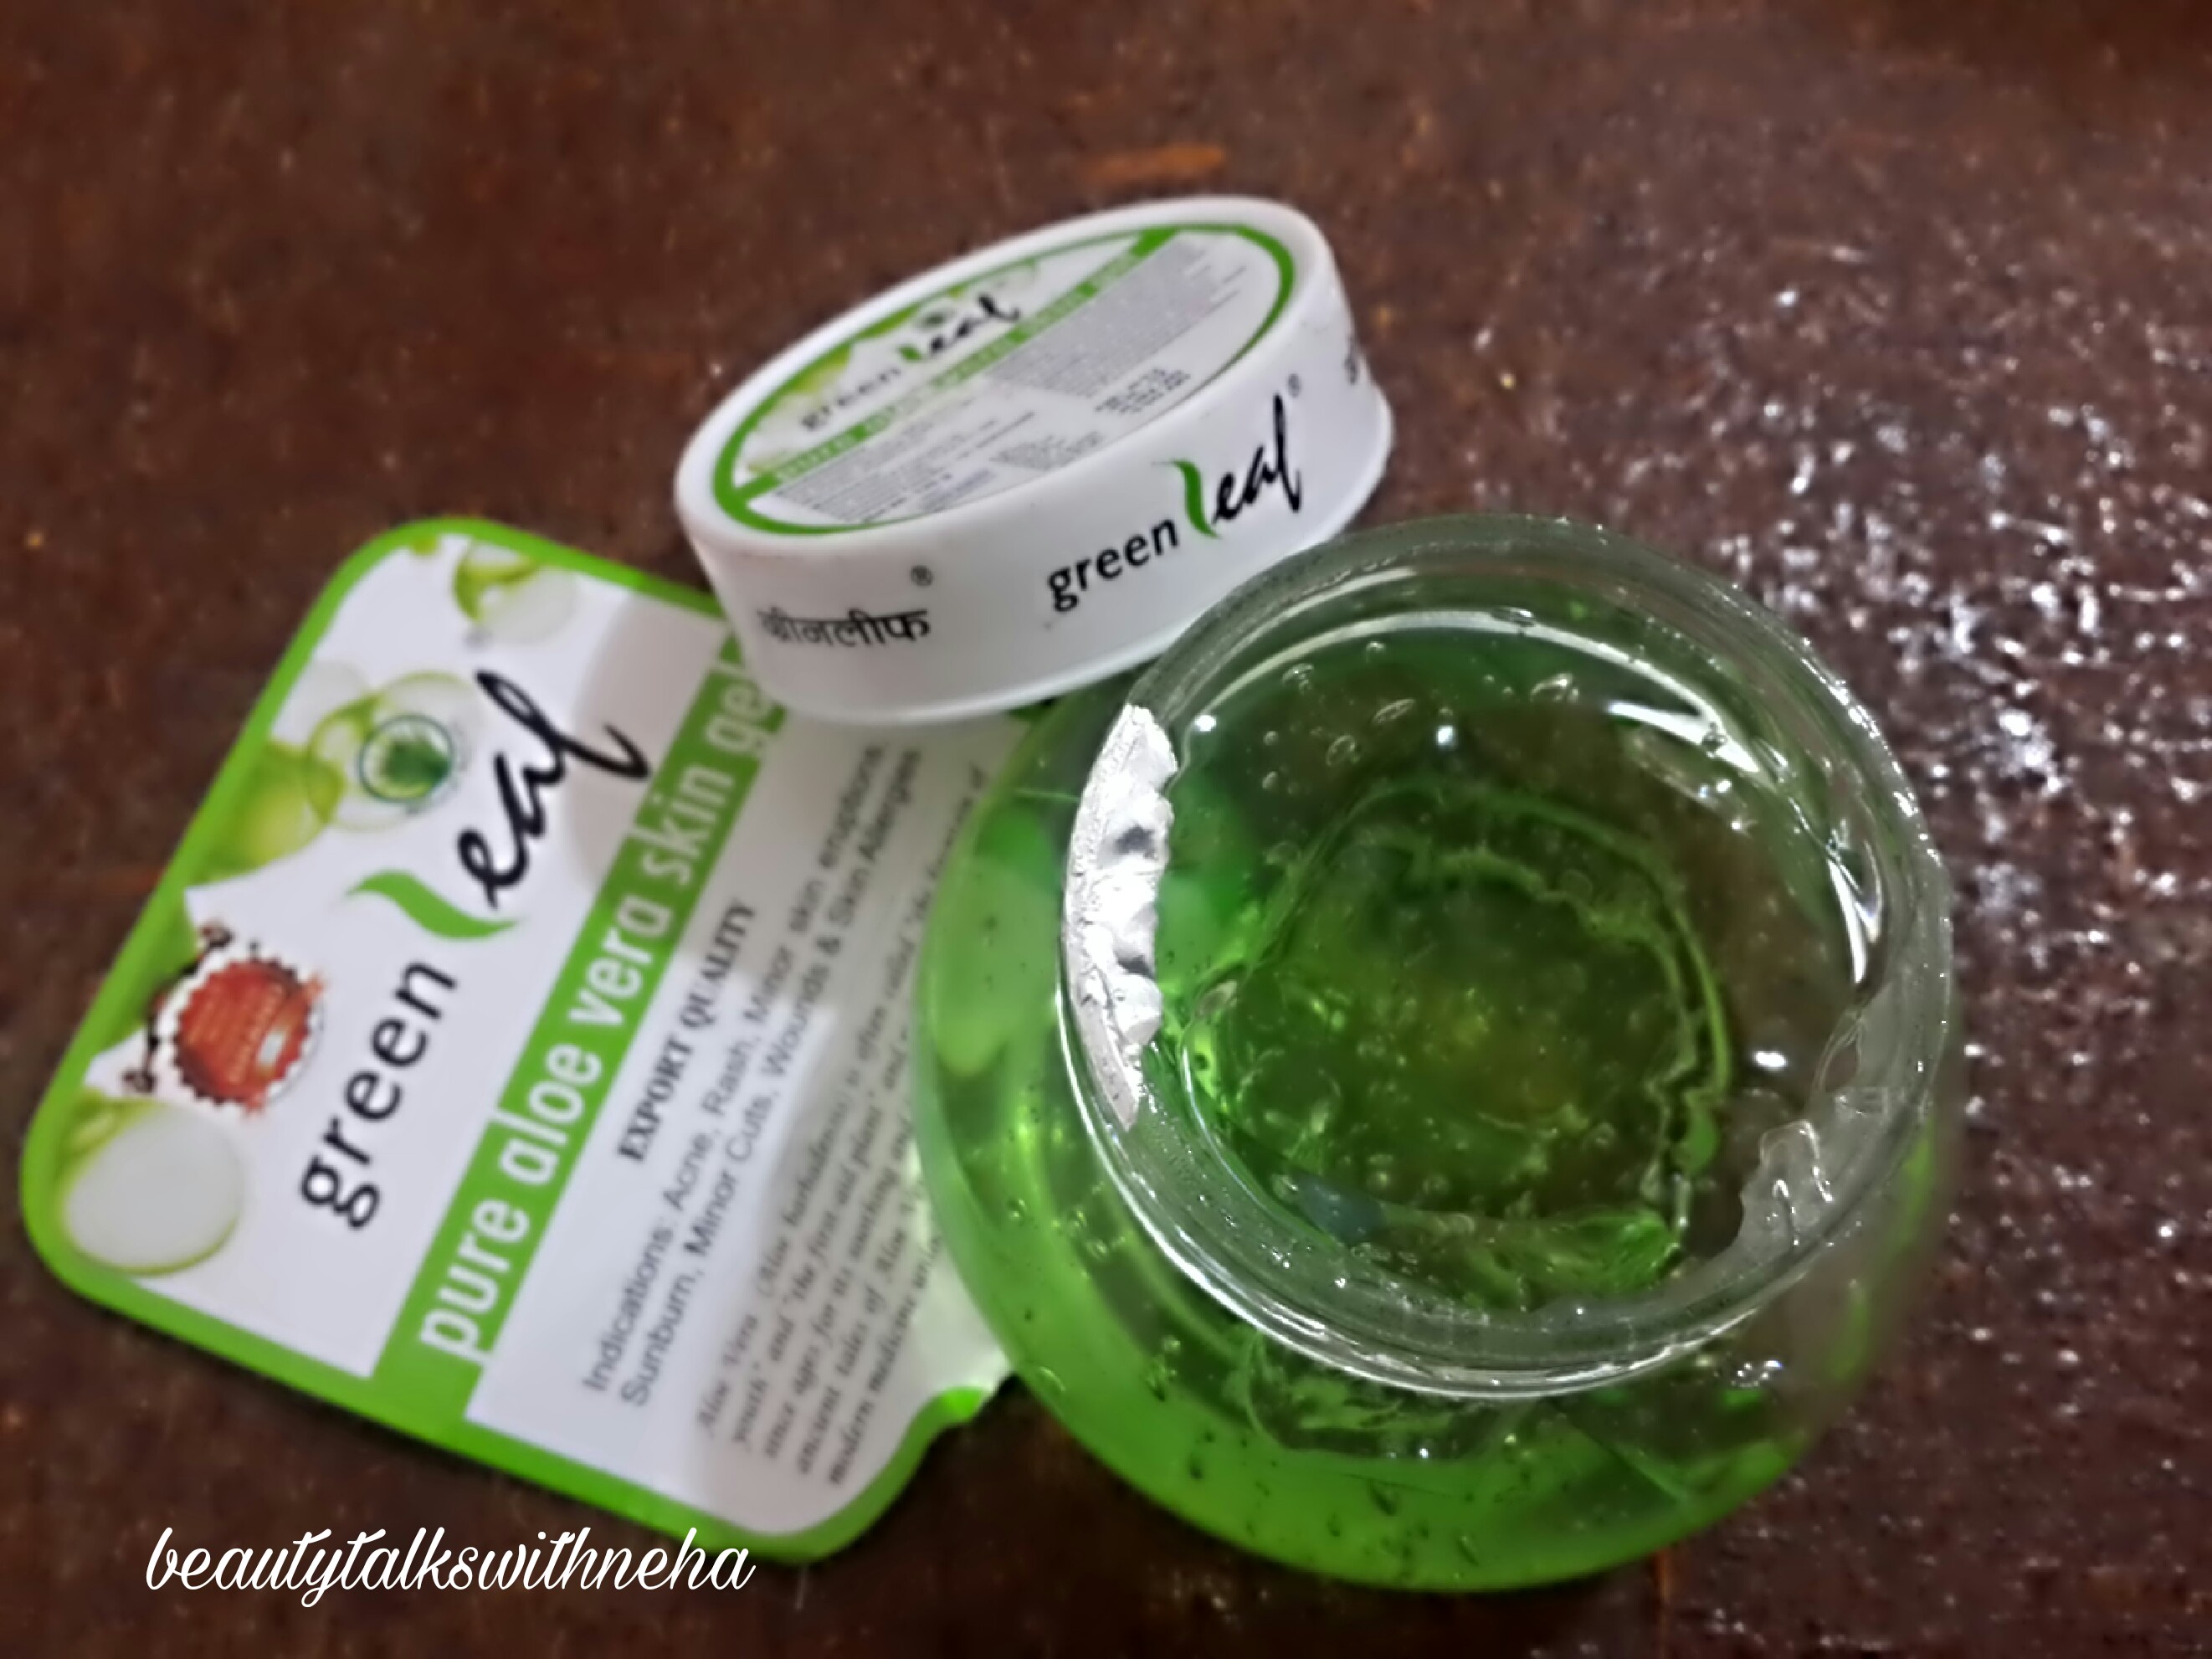 Greenleaf pure aloe bera skin gel review